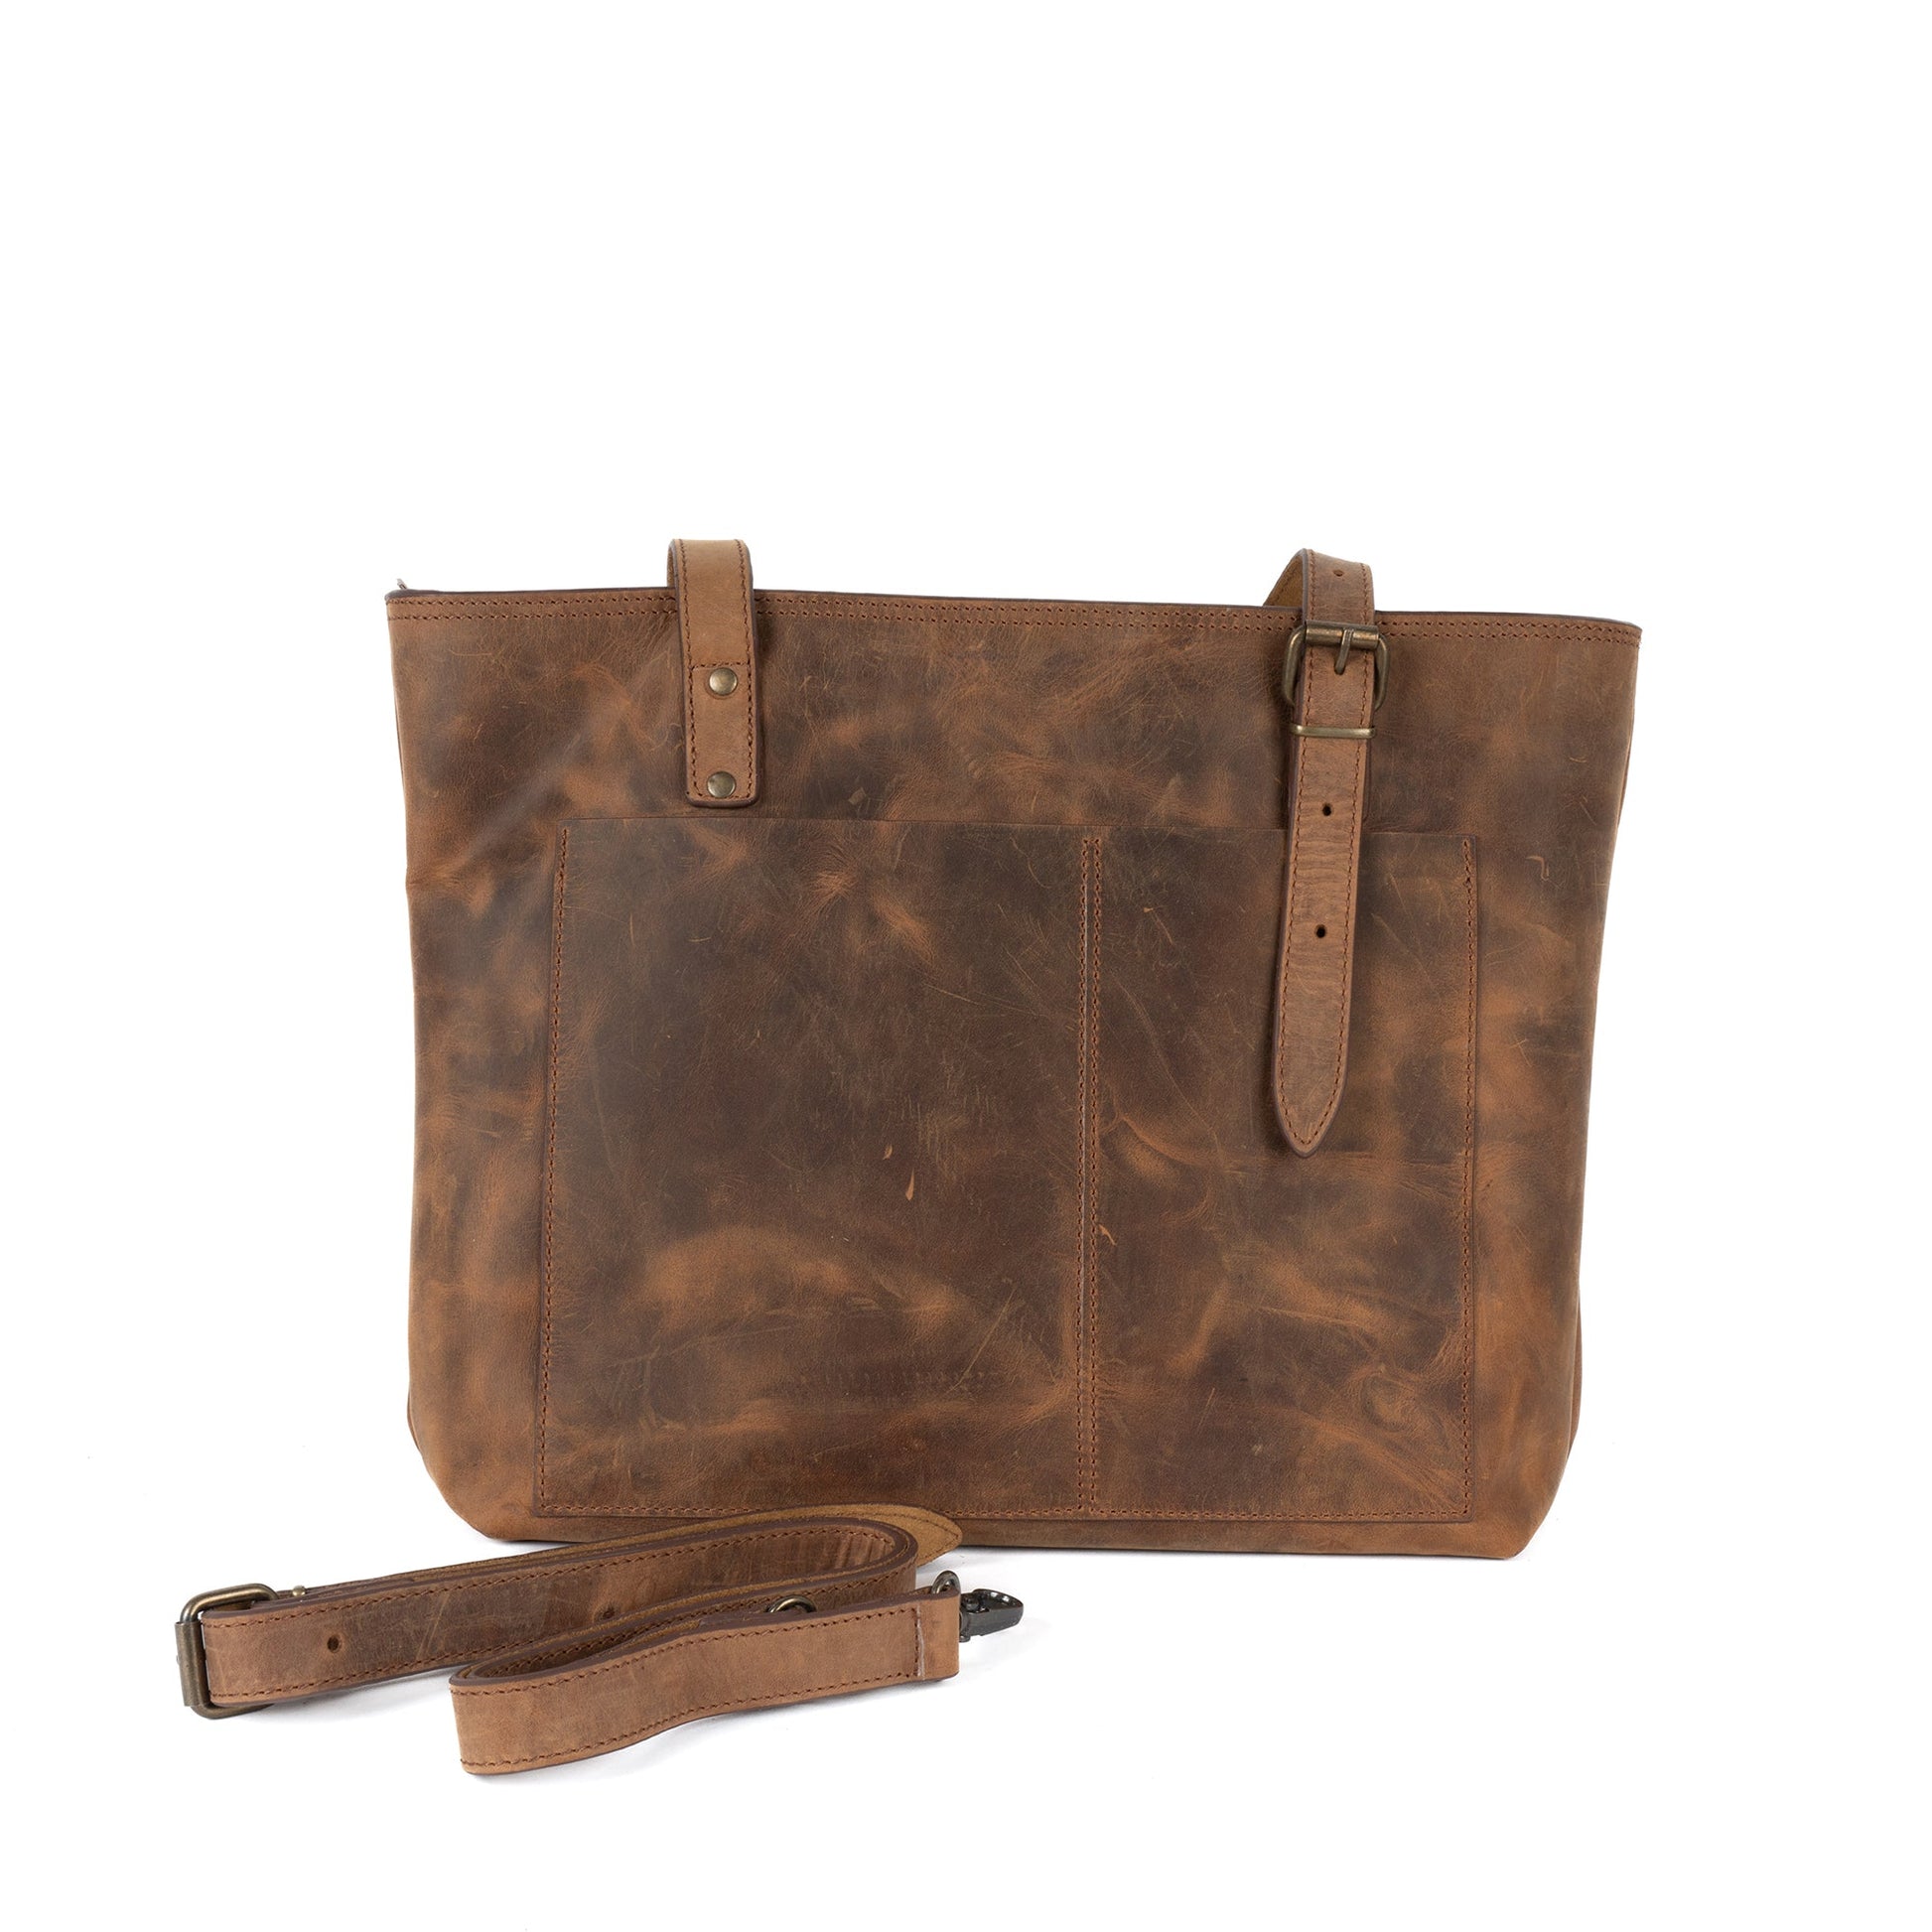 Callisto Leather Tote Bag - Brown - Accessories Zengoda Shop online from Artisan Brands